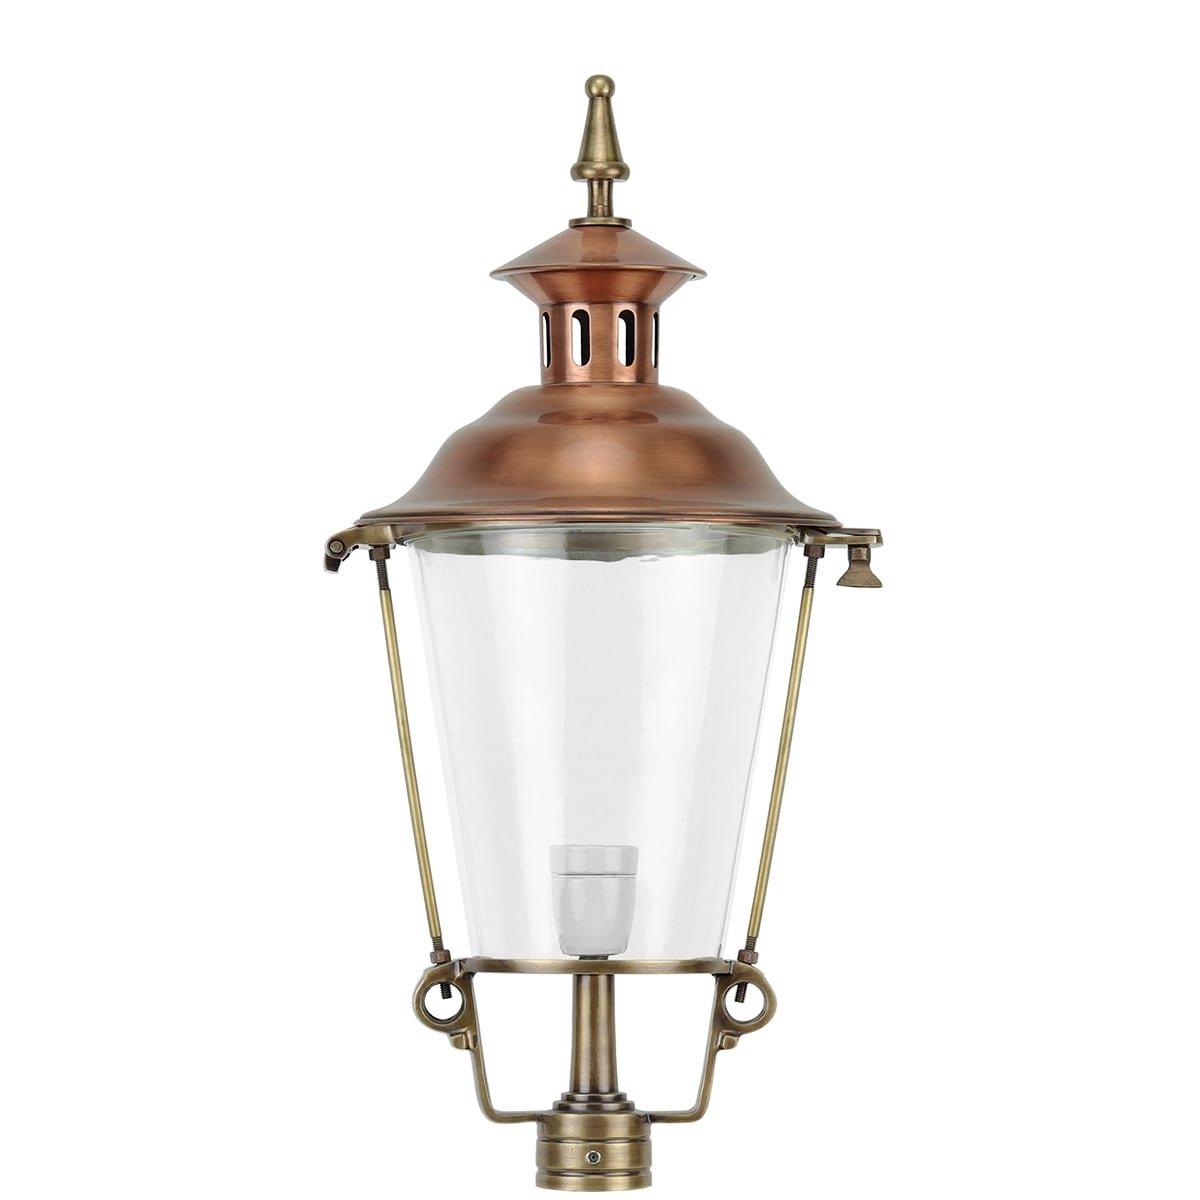 Loose lantern lamp bronze K2670 - 70 cm